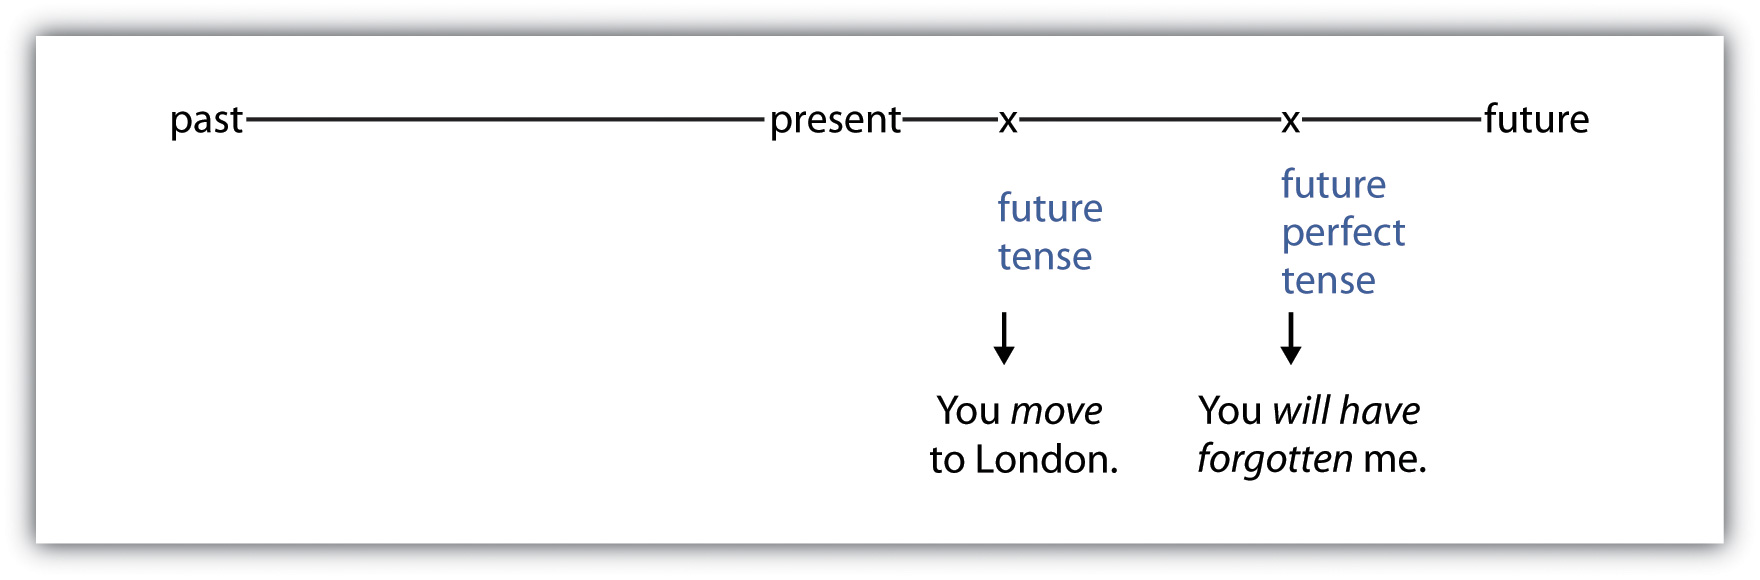 You move to London (future tense). You will have forgotten me (future perfect tense).